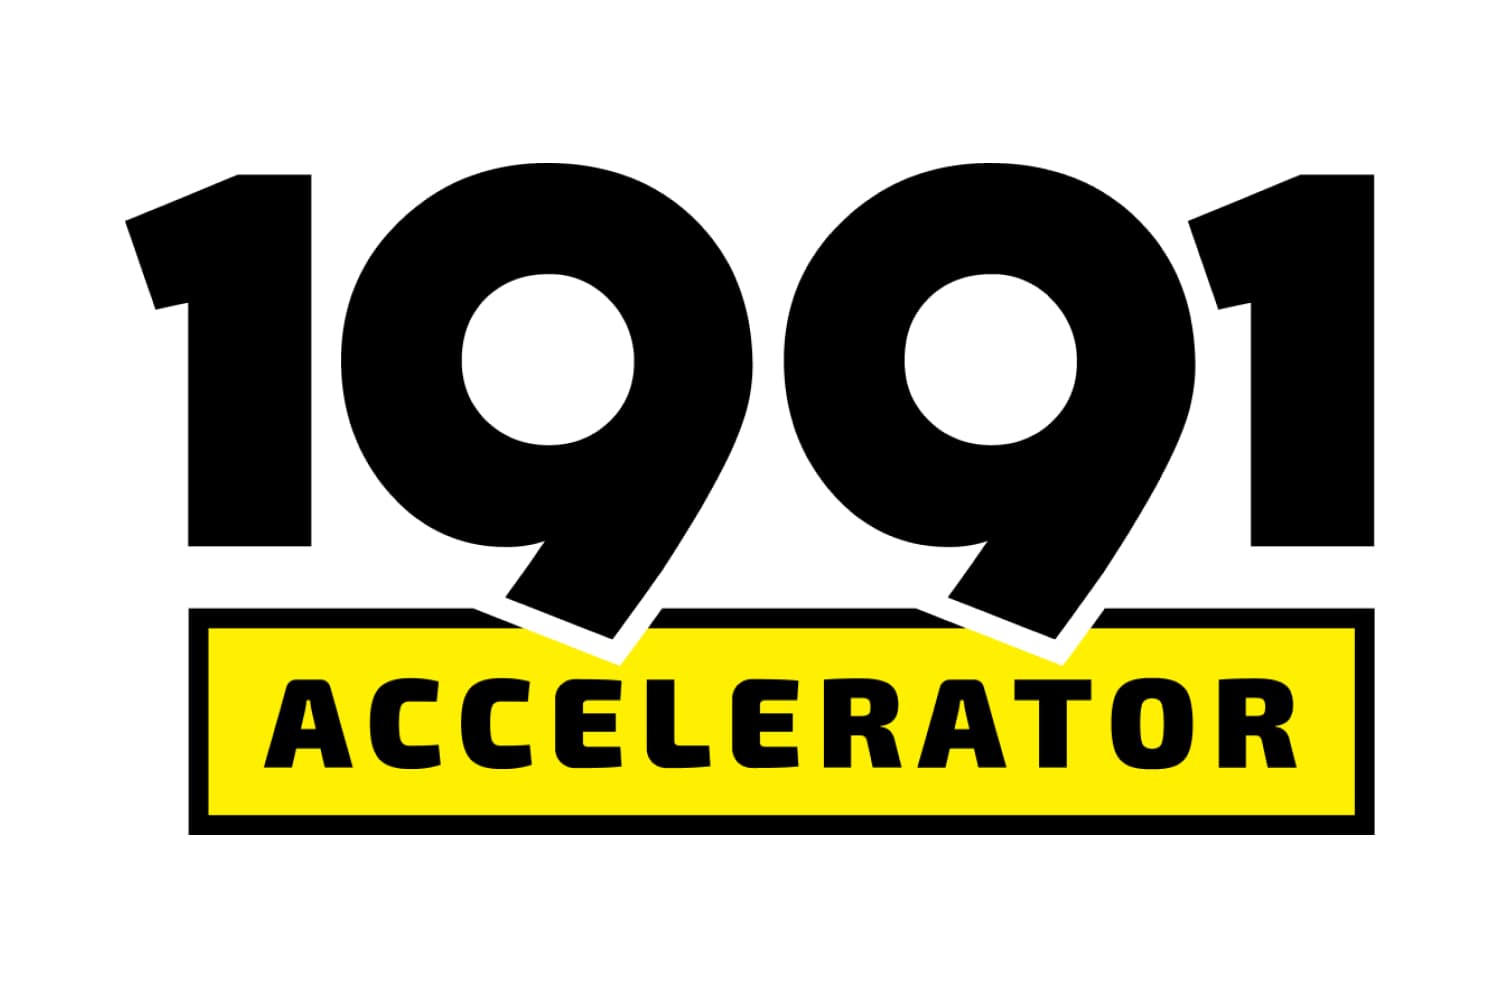 1991 Accelerator logo